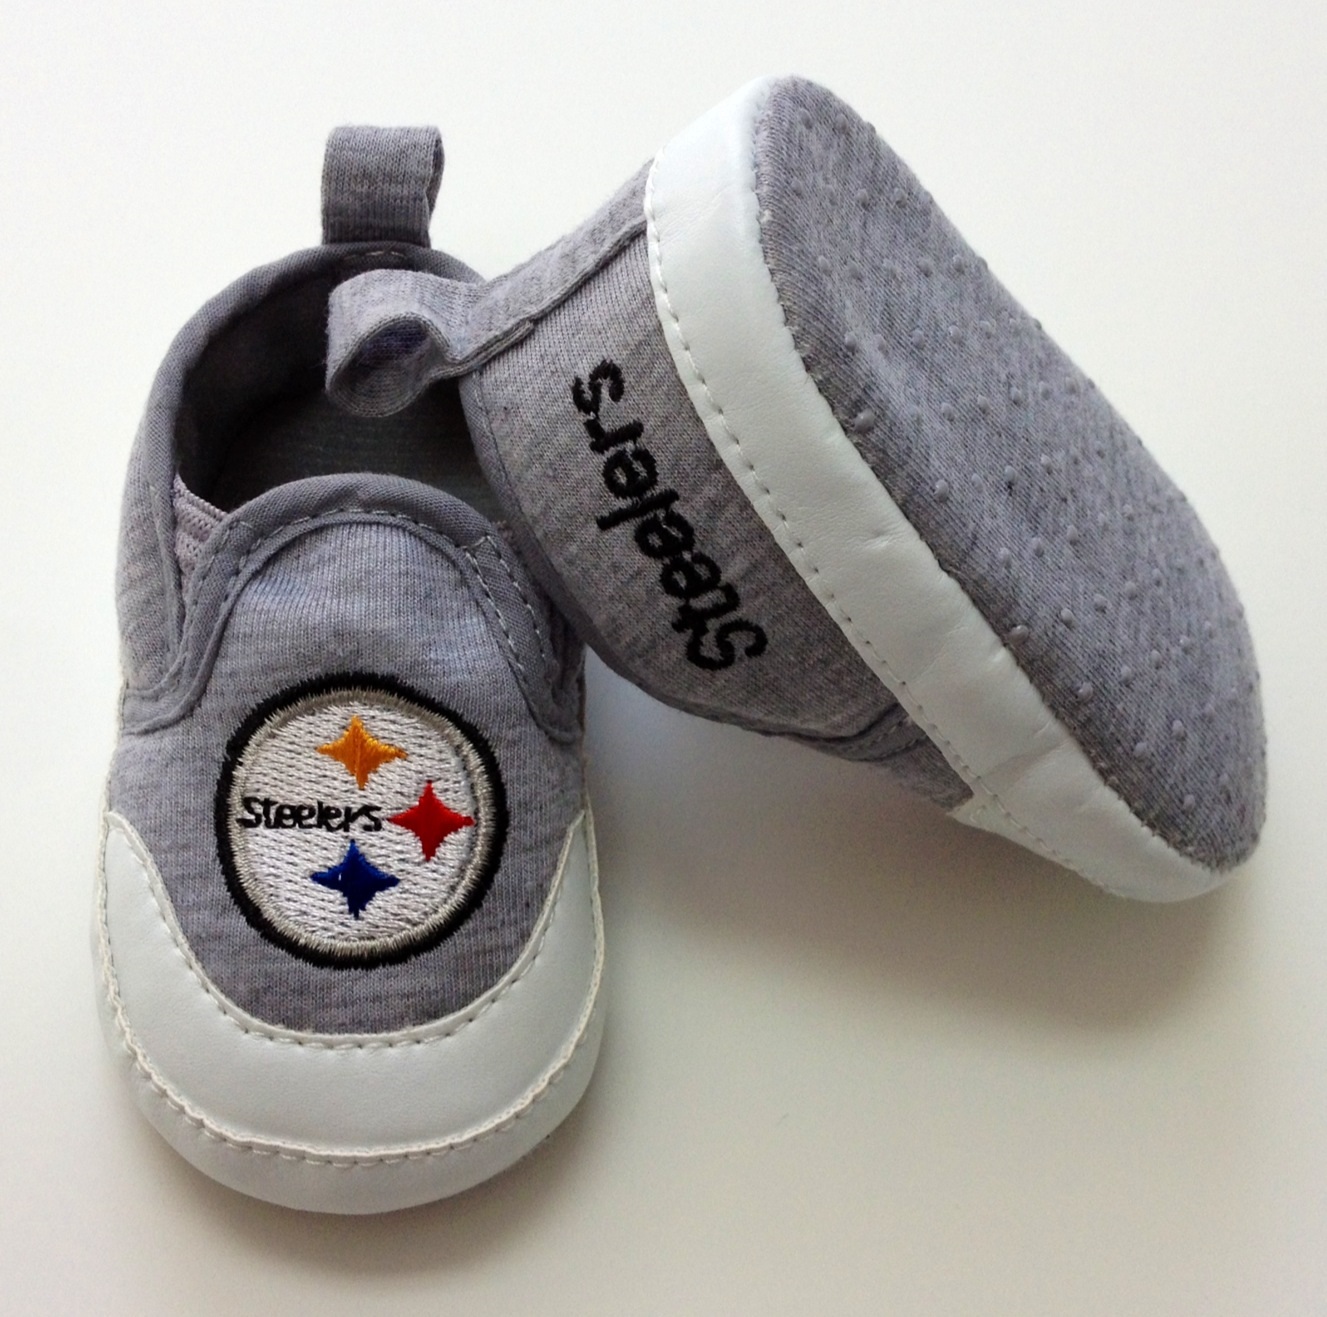 Steelers Baby Pre-Walker Shoes